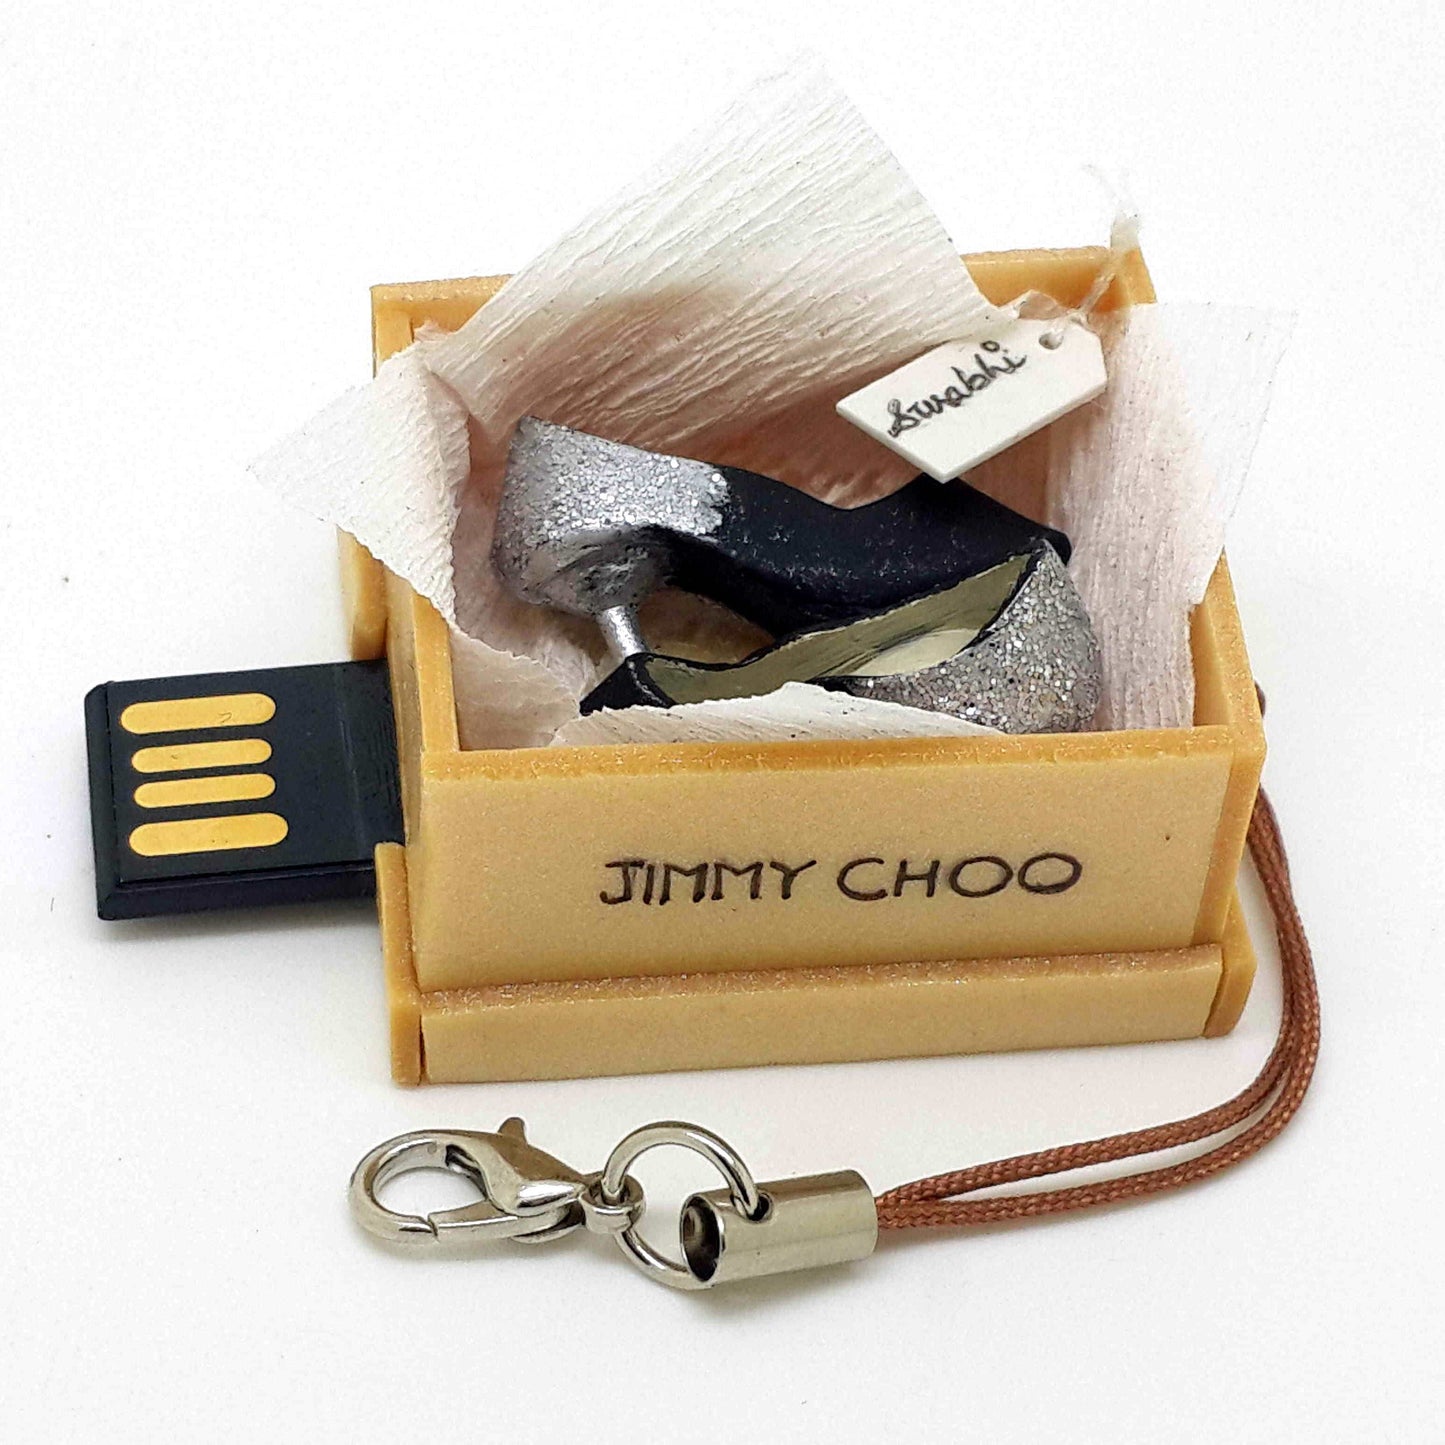 Jimmy Choo Miniature Shoes Novelty Pen Drive